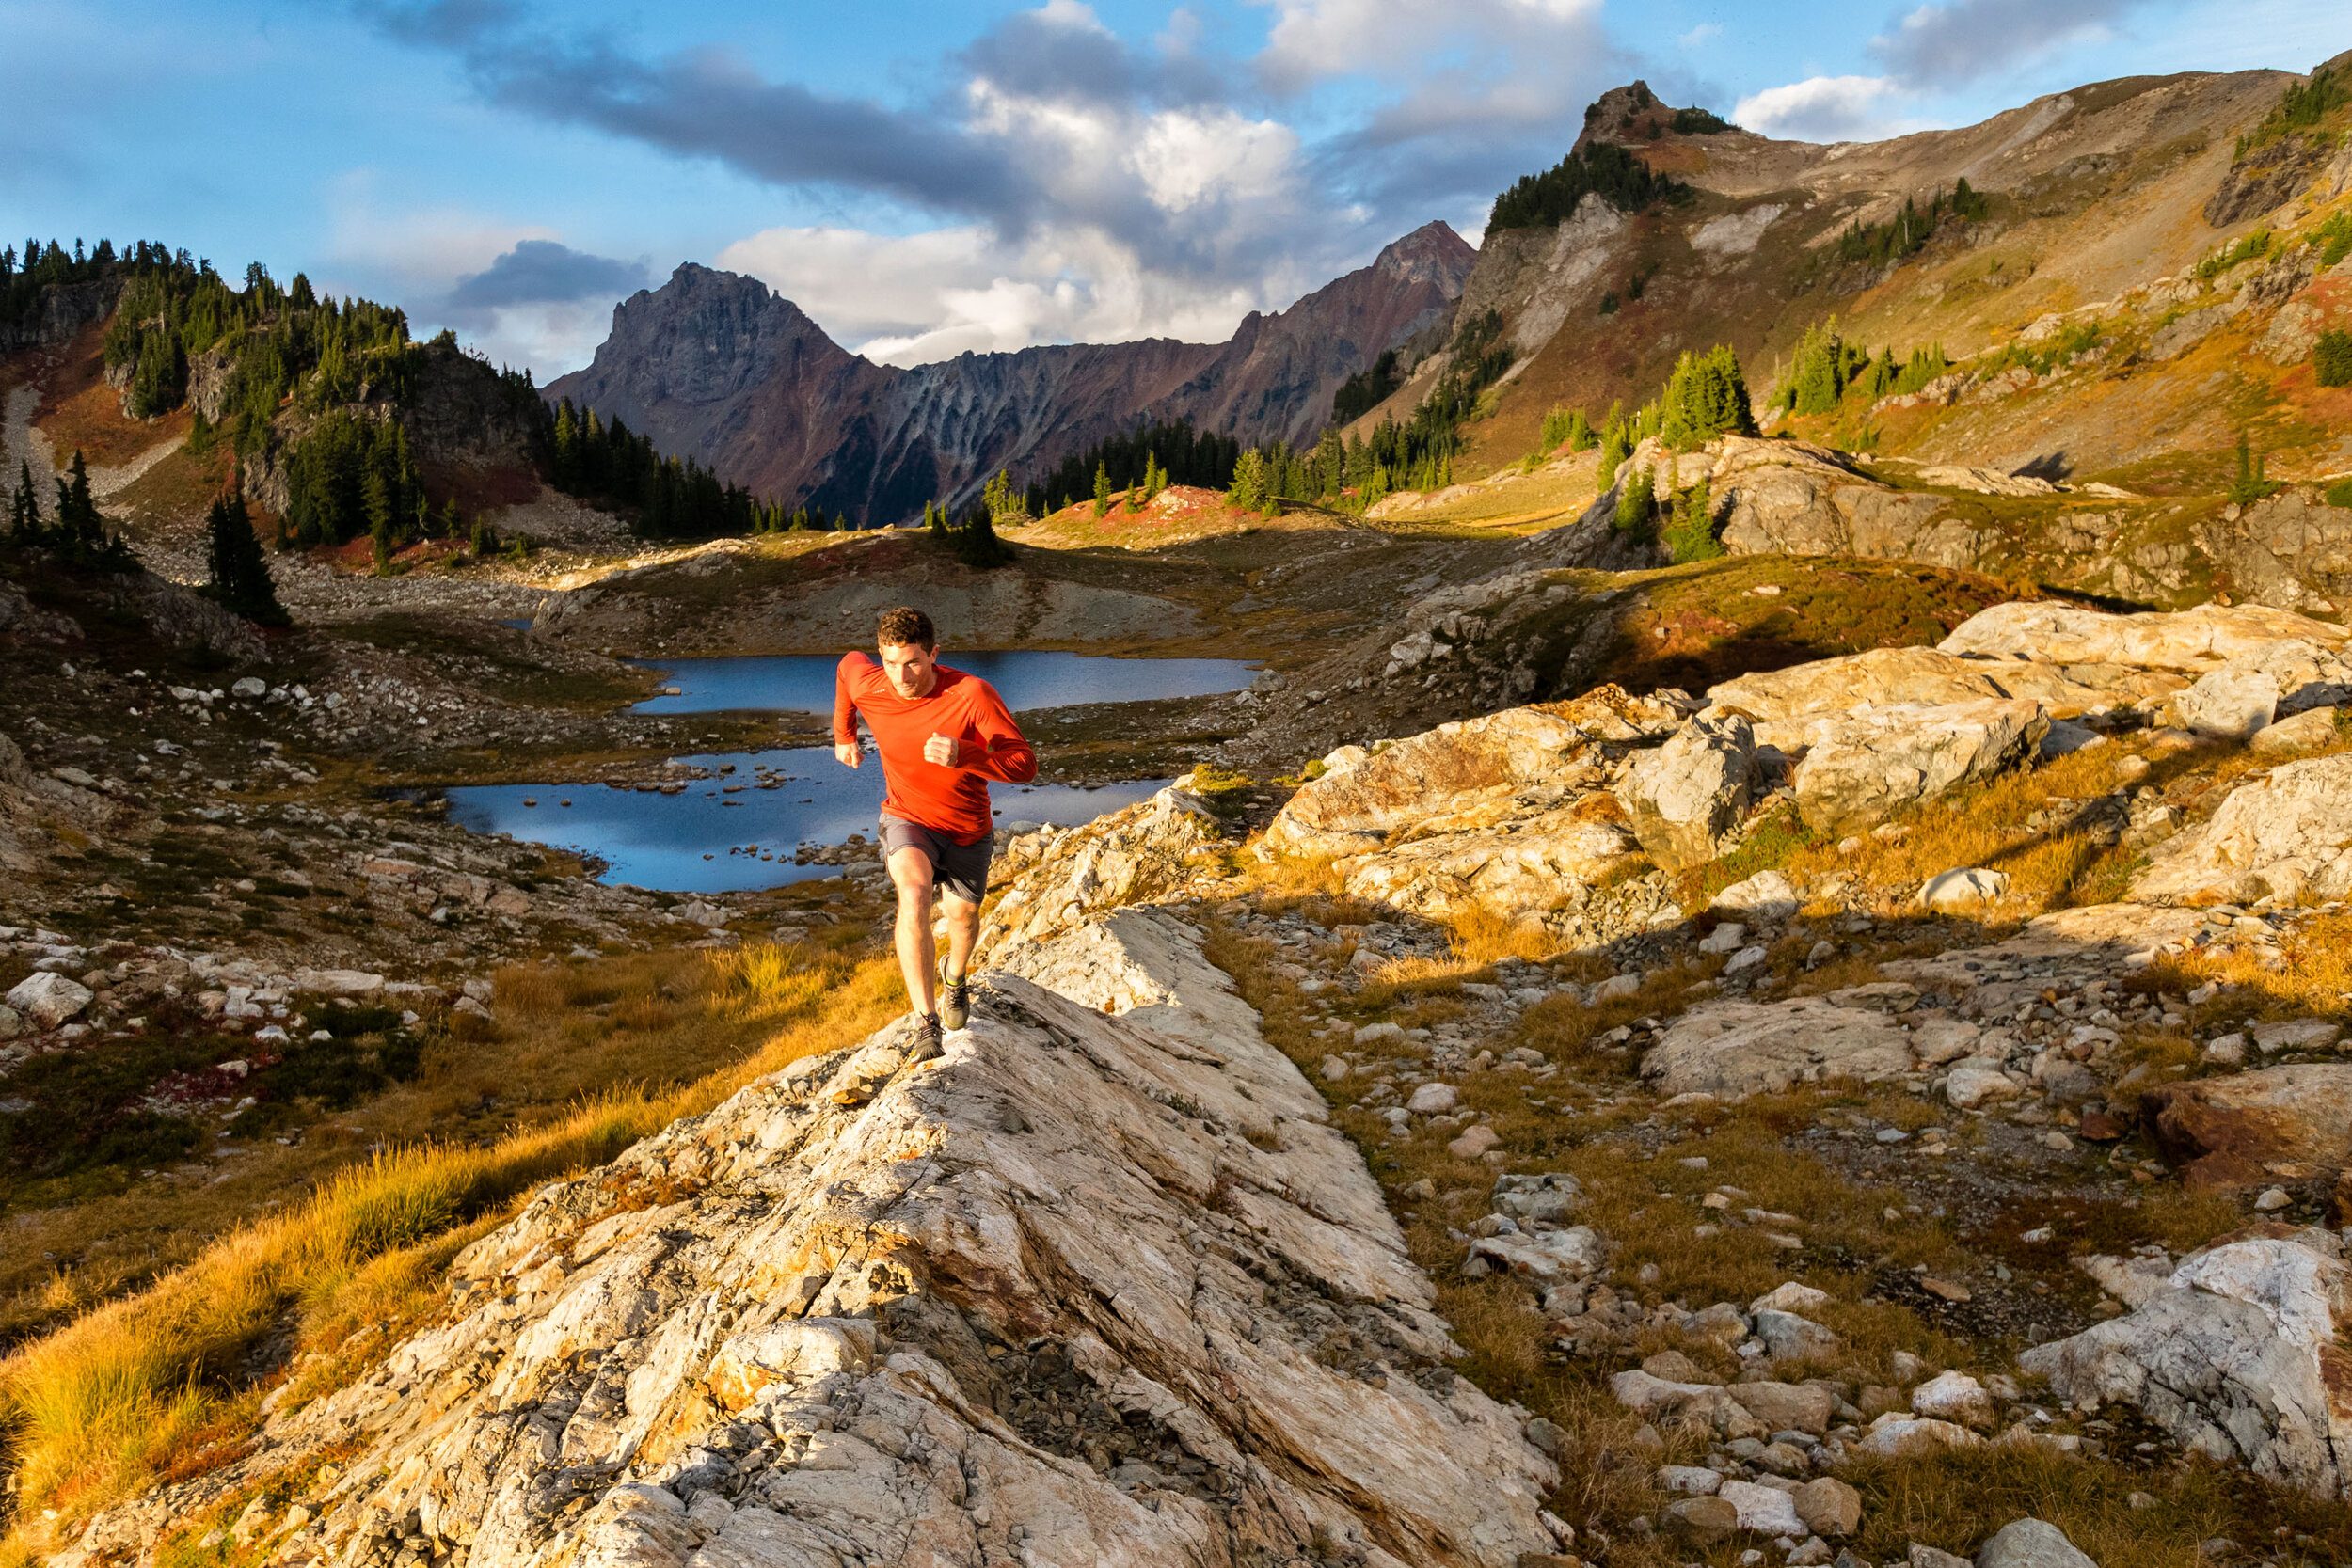  Adventure: Alex Aizenman trail running at Yellow Aster Butte in the North Cascades in autumn, Washington 